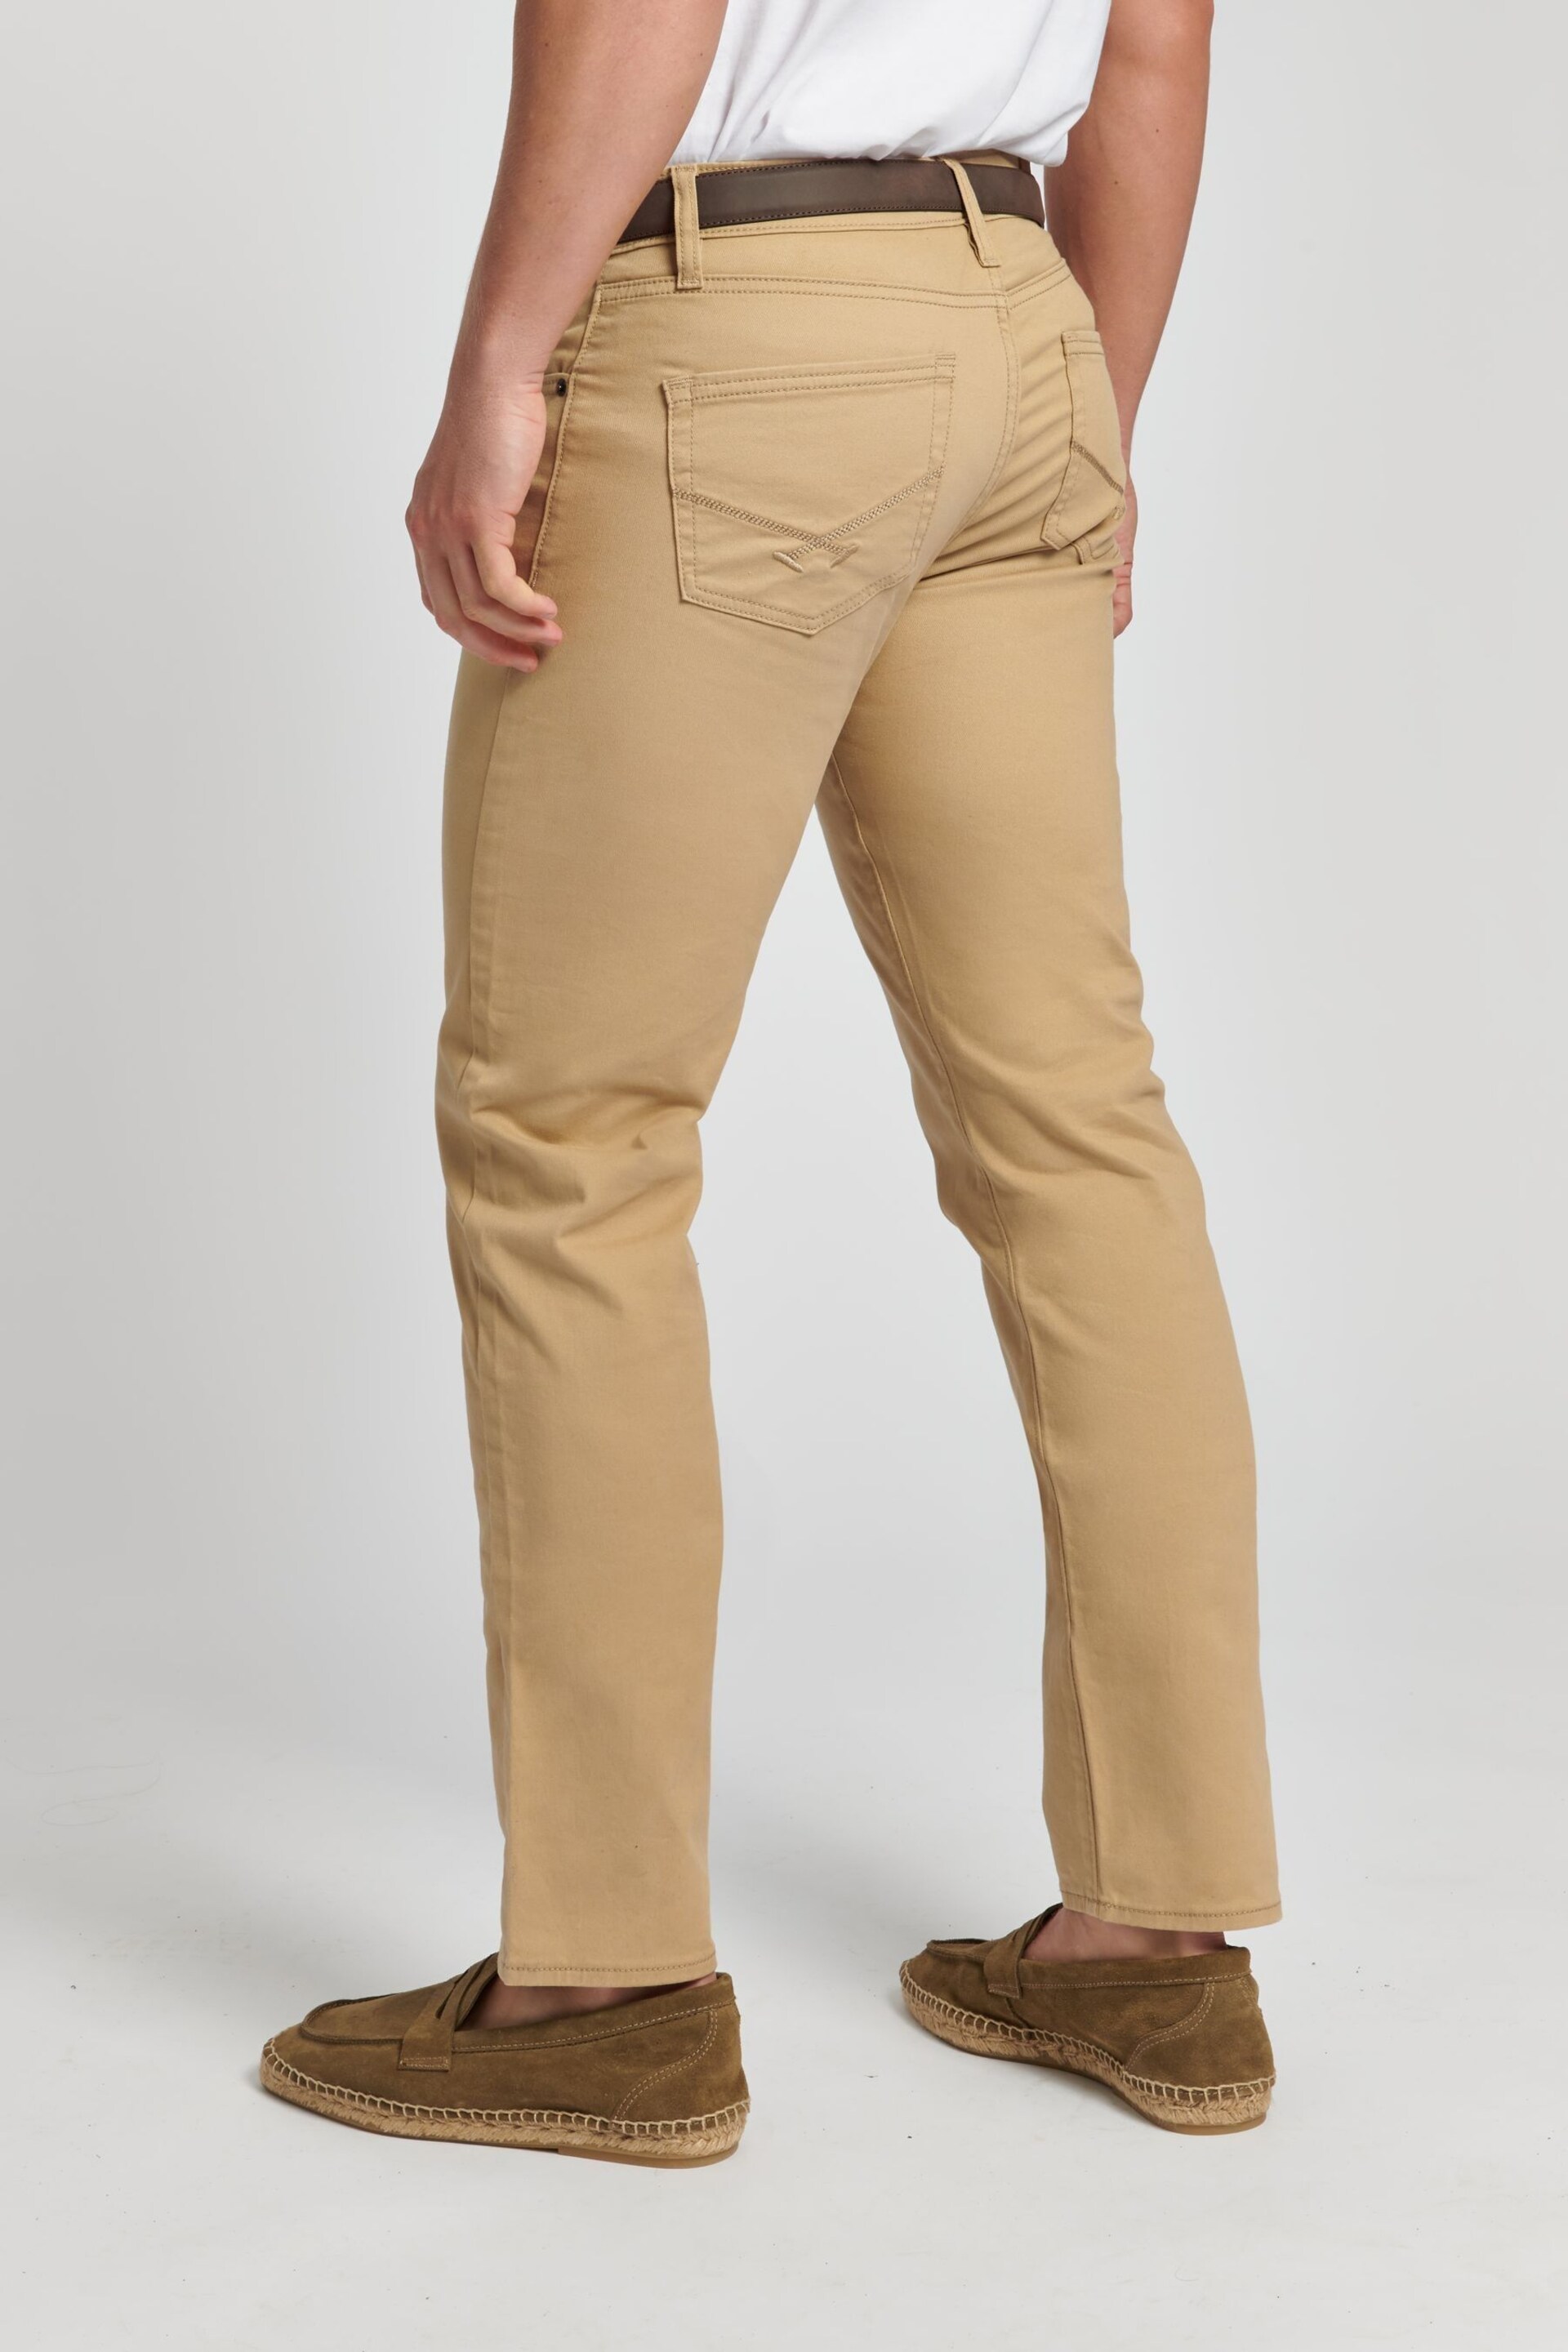 U.S. Polo Assn Tan USPA Woven Trousers - Image 2 of 4